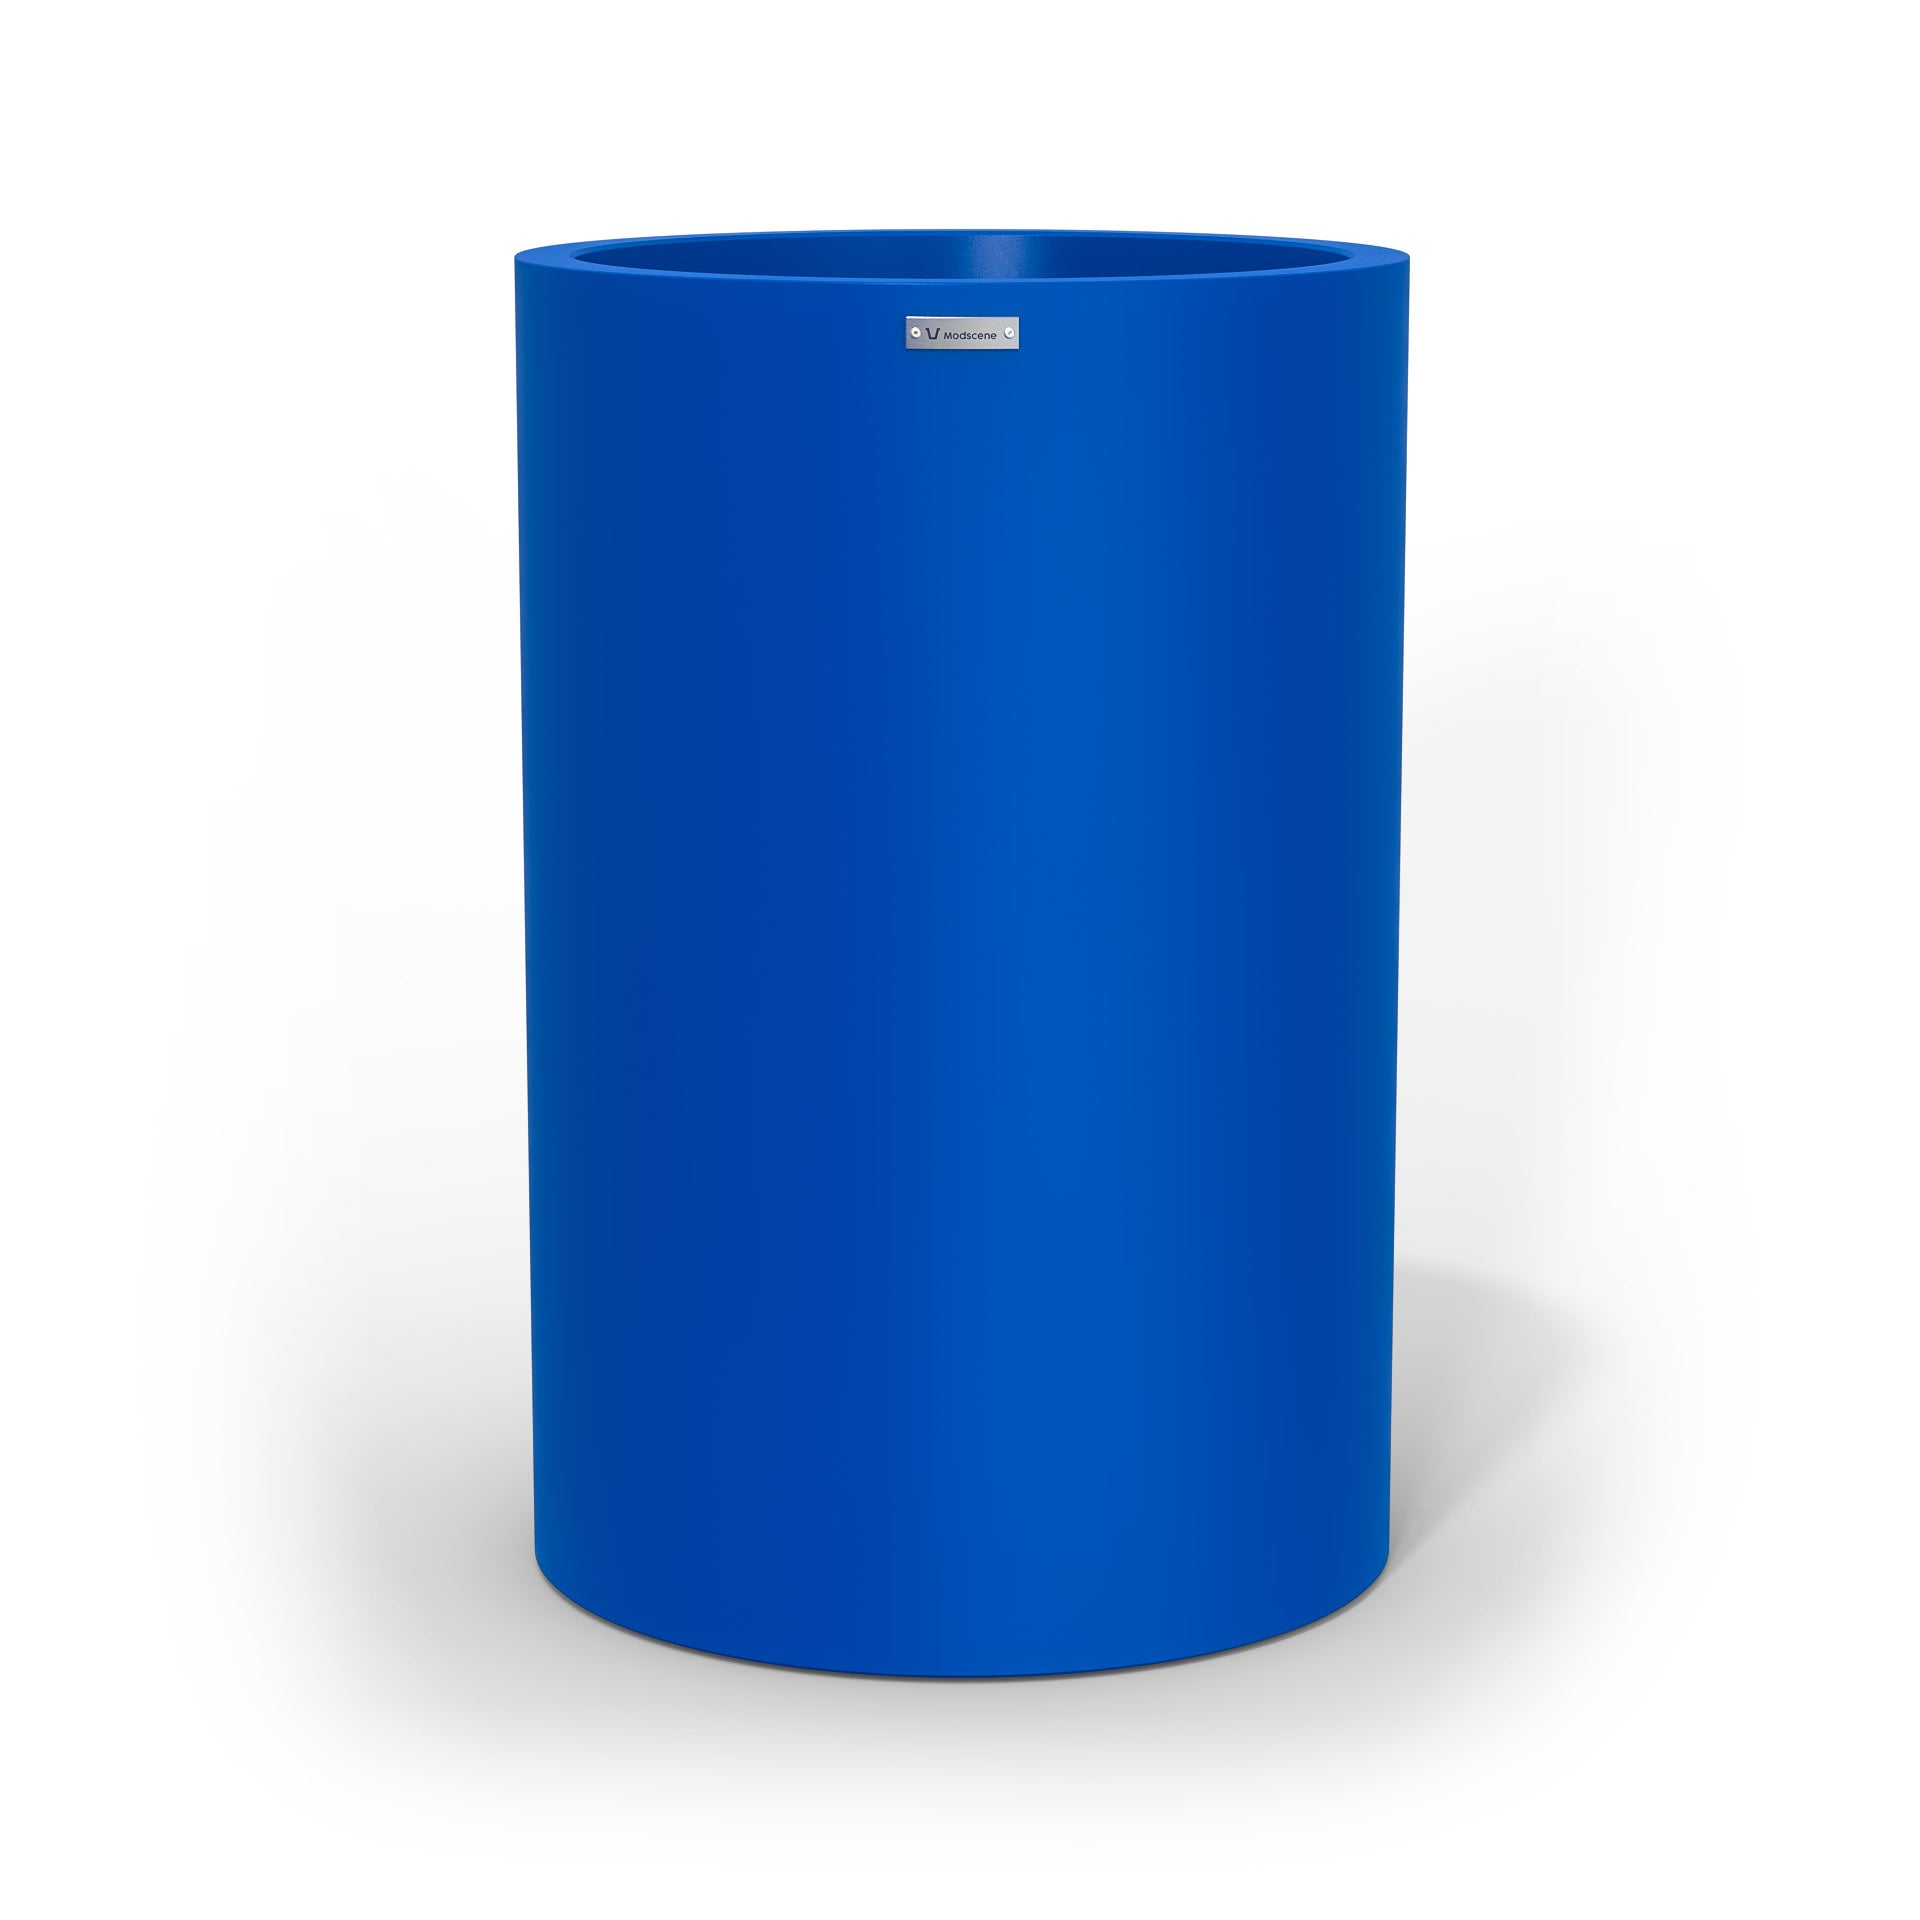 Large Modscene cylinder shaped planter pot in a blue colour. NZ made.